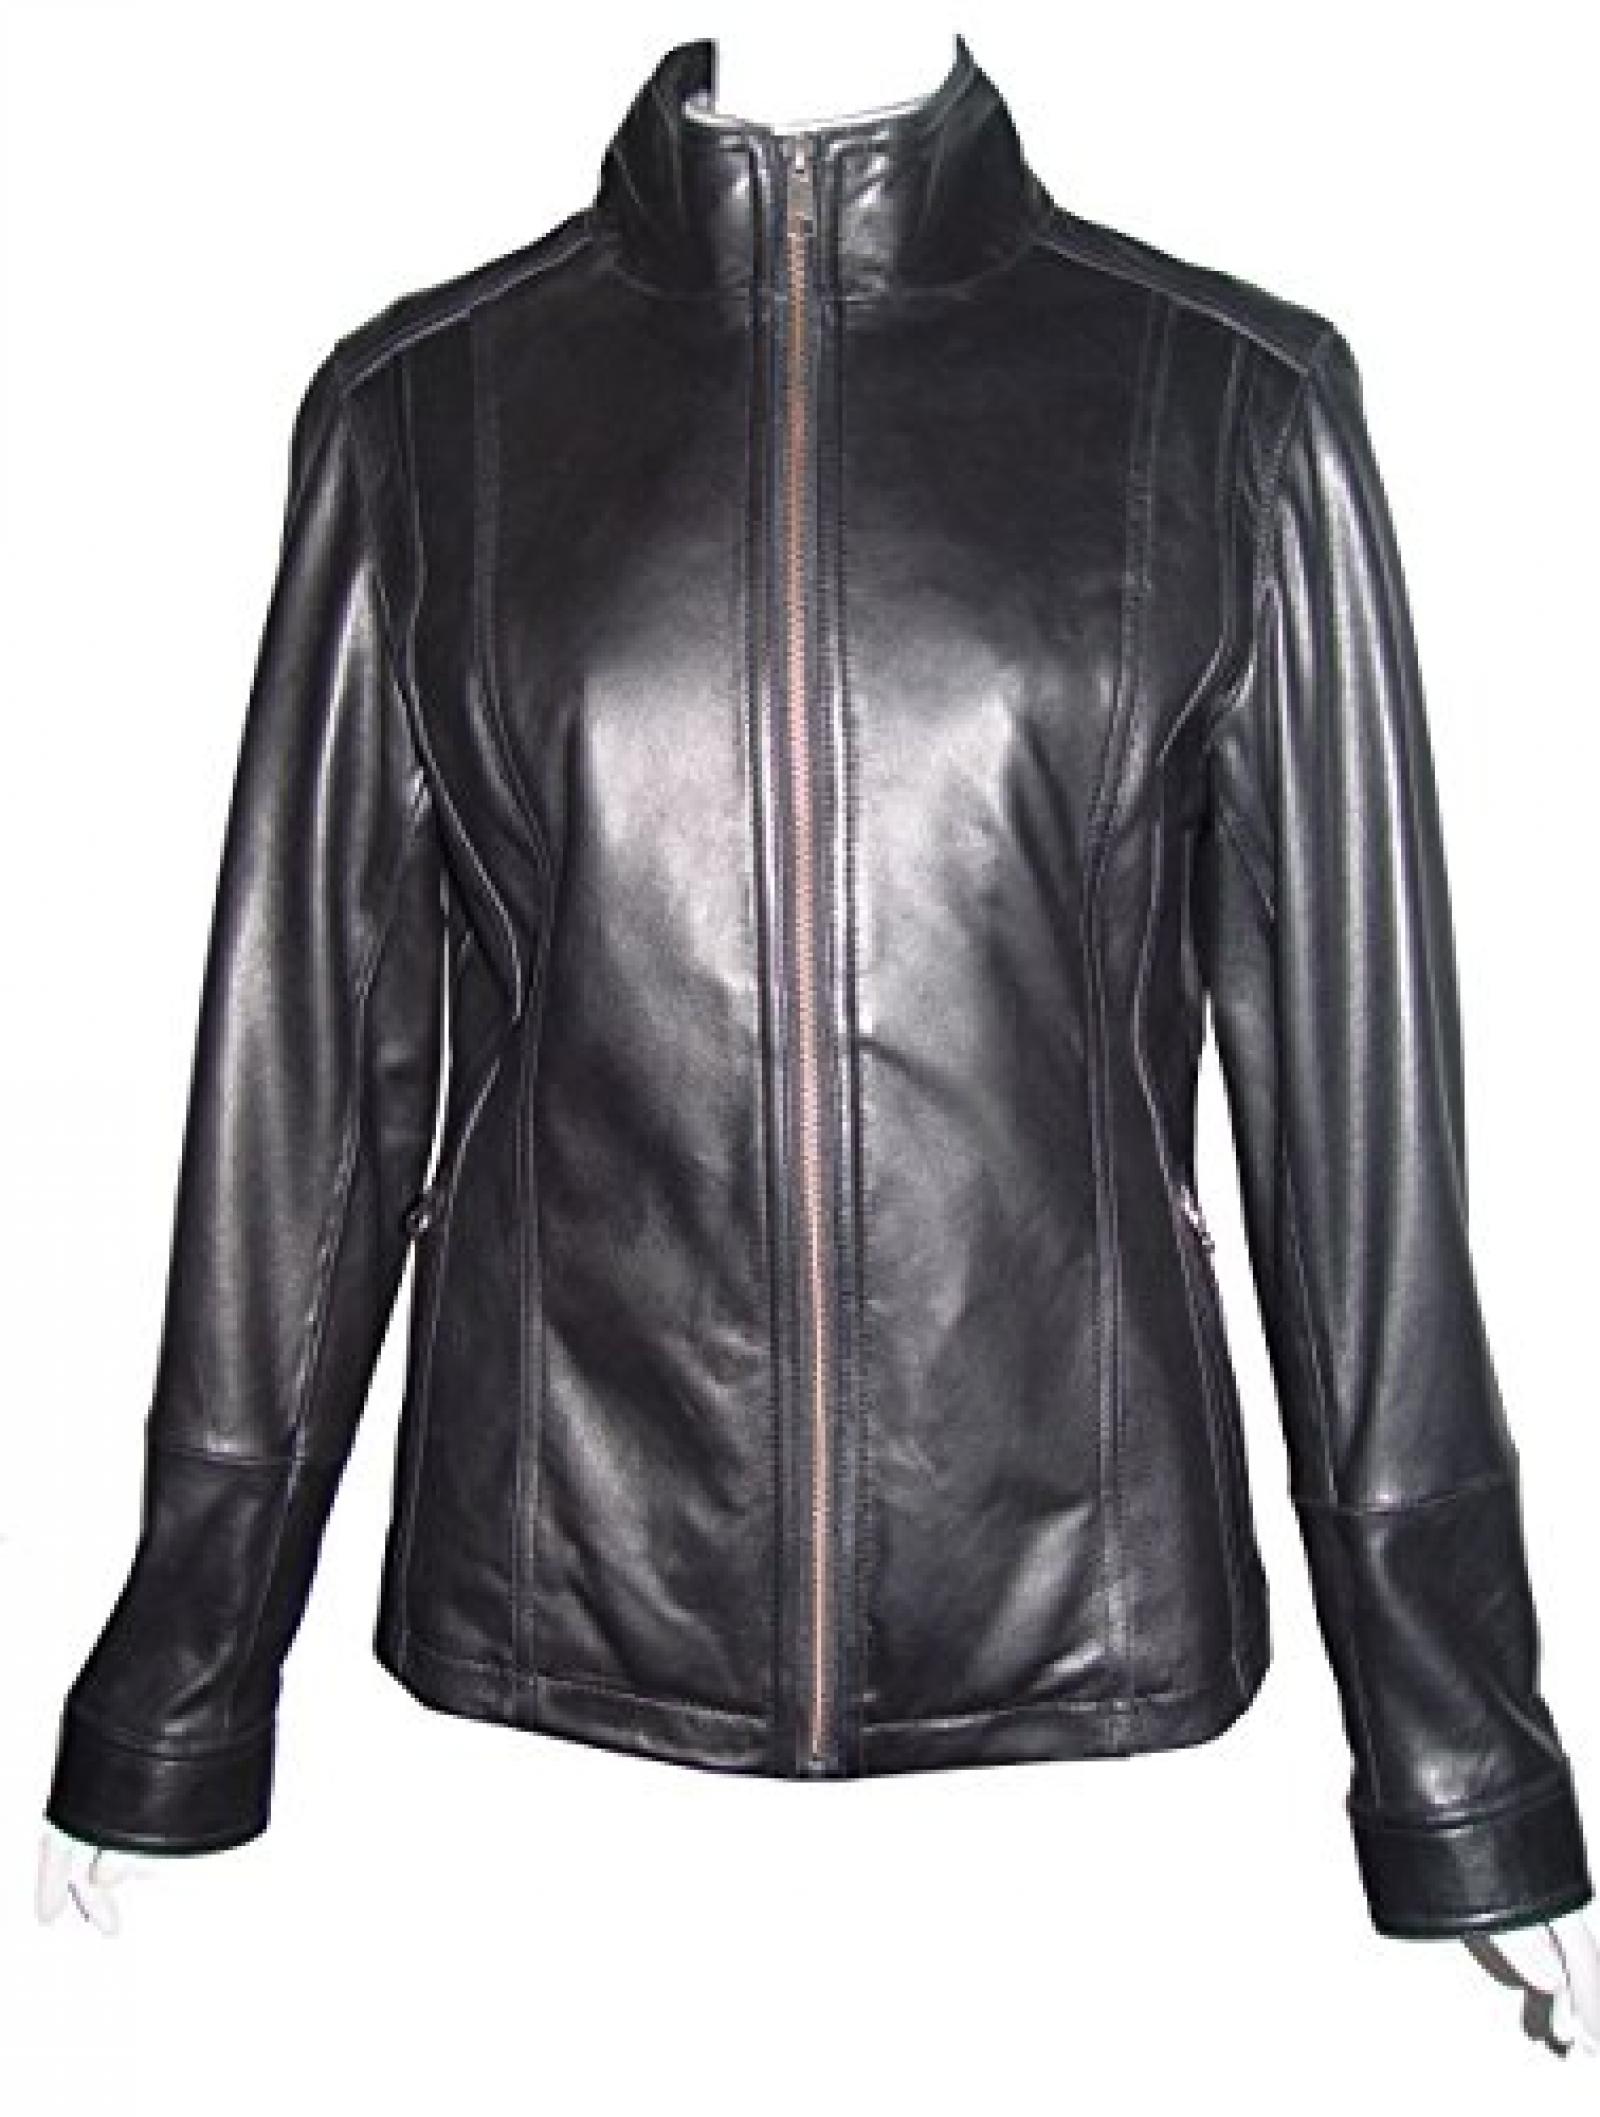 Nettailor Women PLUS SIZE 4202 Soft Leather New Casual Jacket Zip Front Closure 